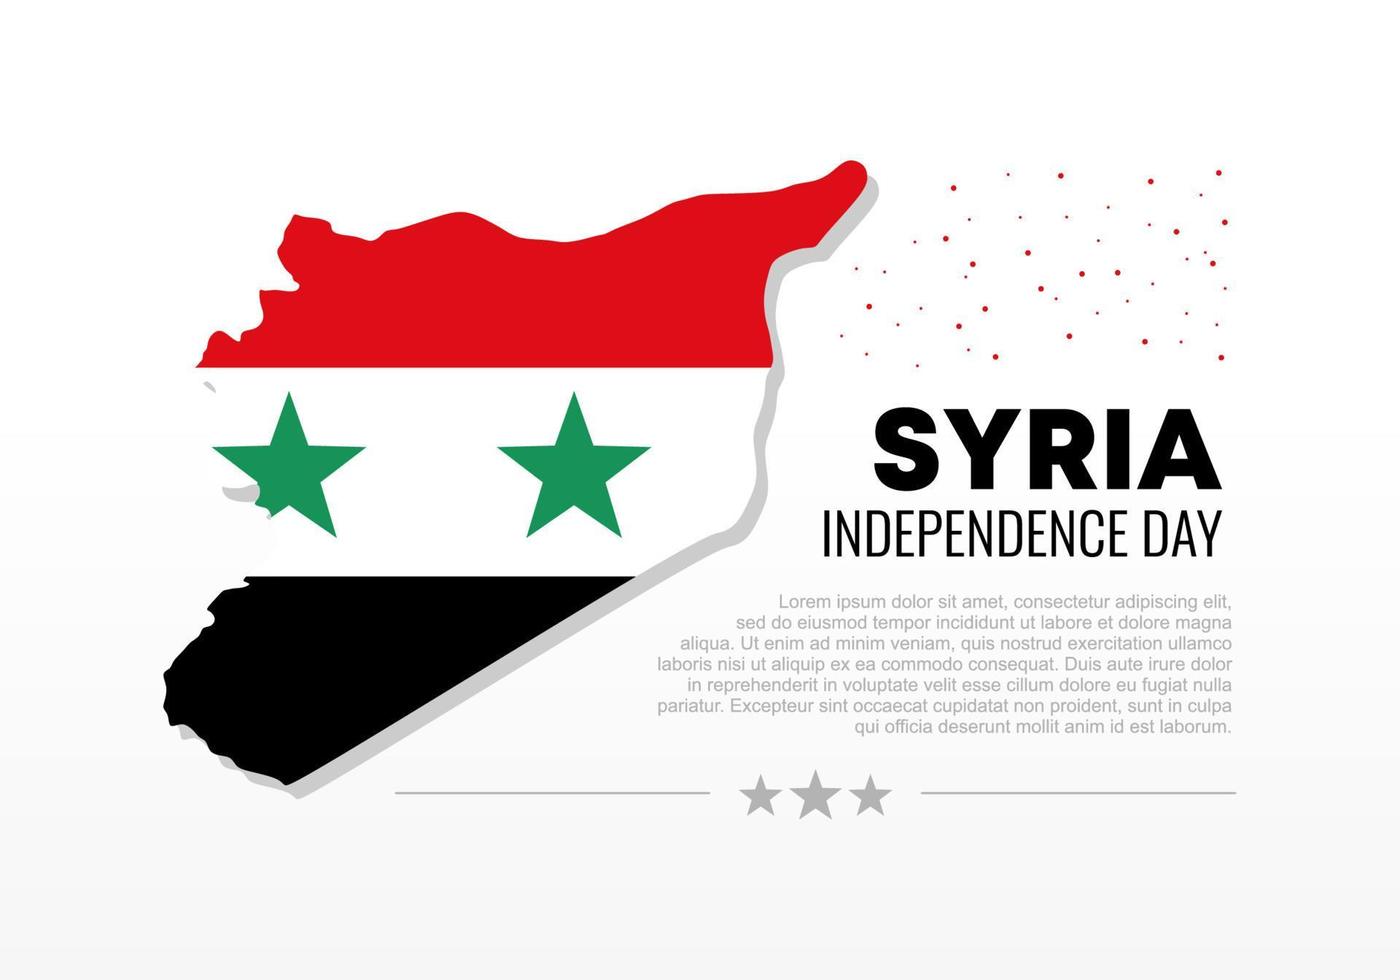 Syria independence day background for national celebration on April 11 vector